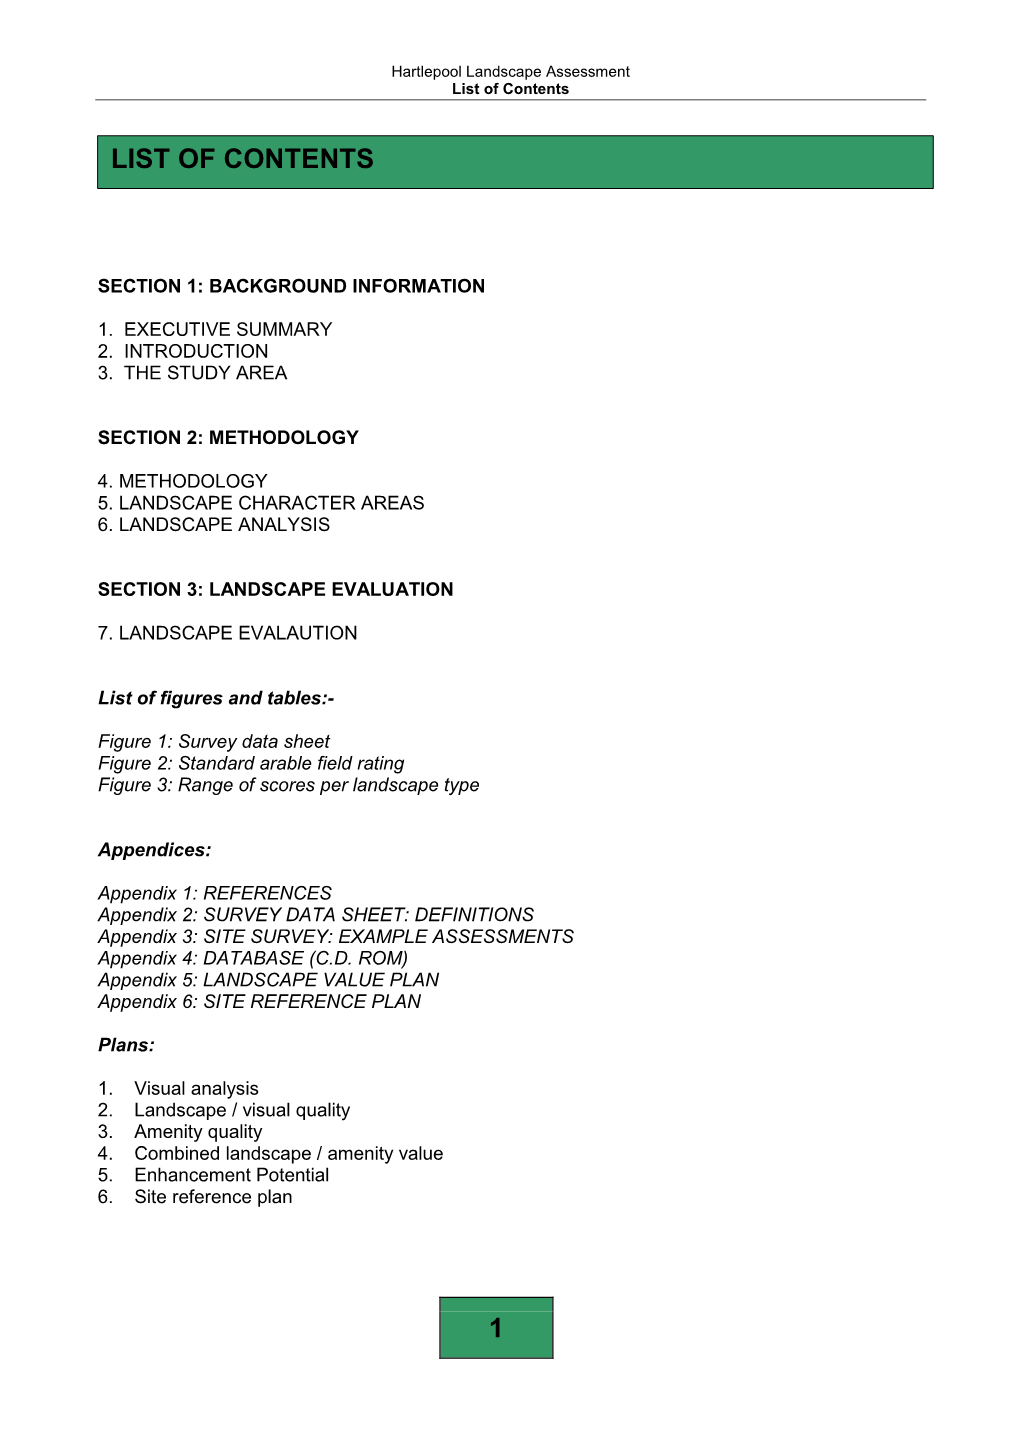 Hartlepool Landscape Assessment List of Contents